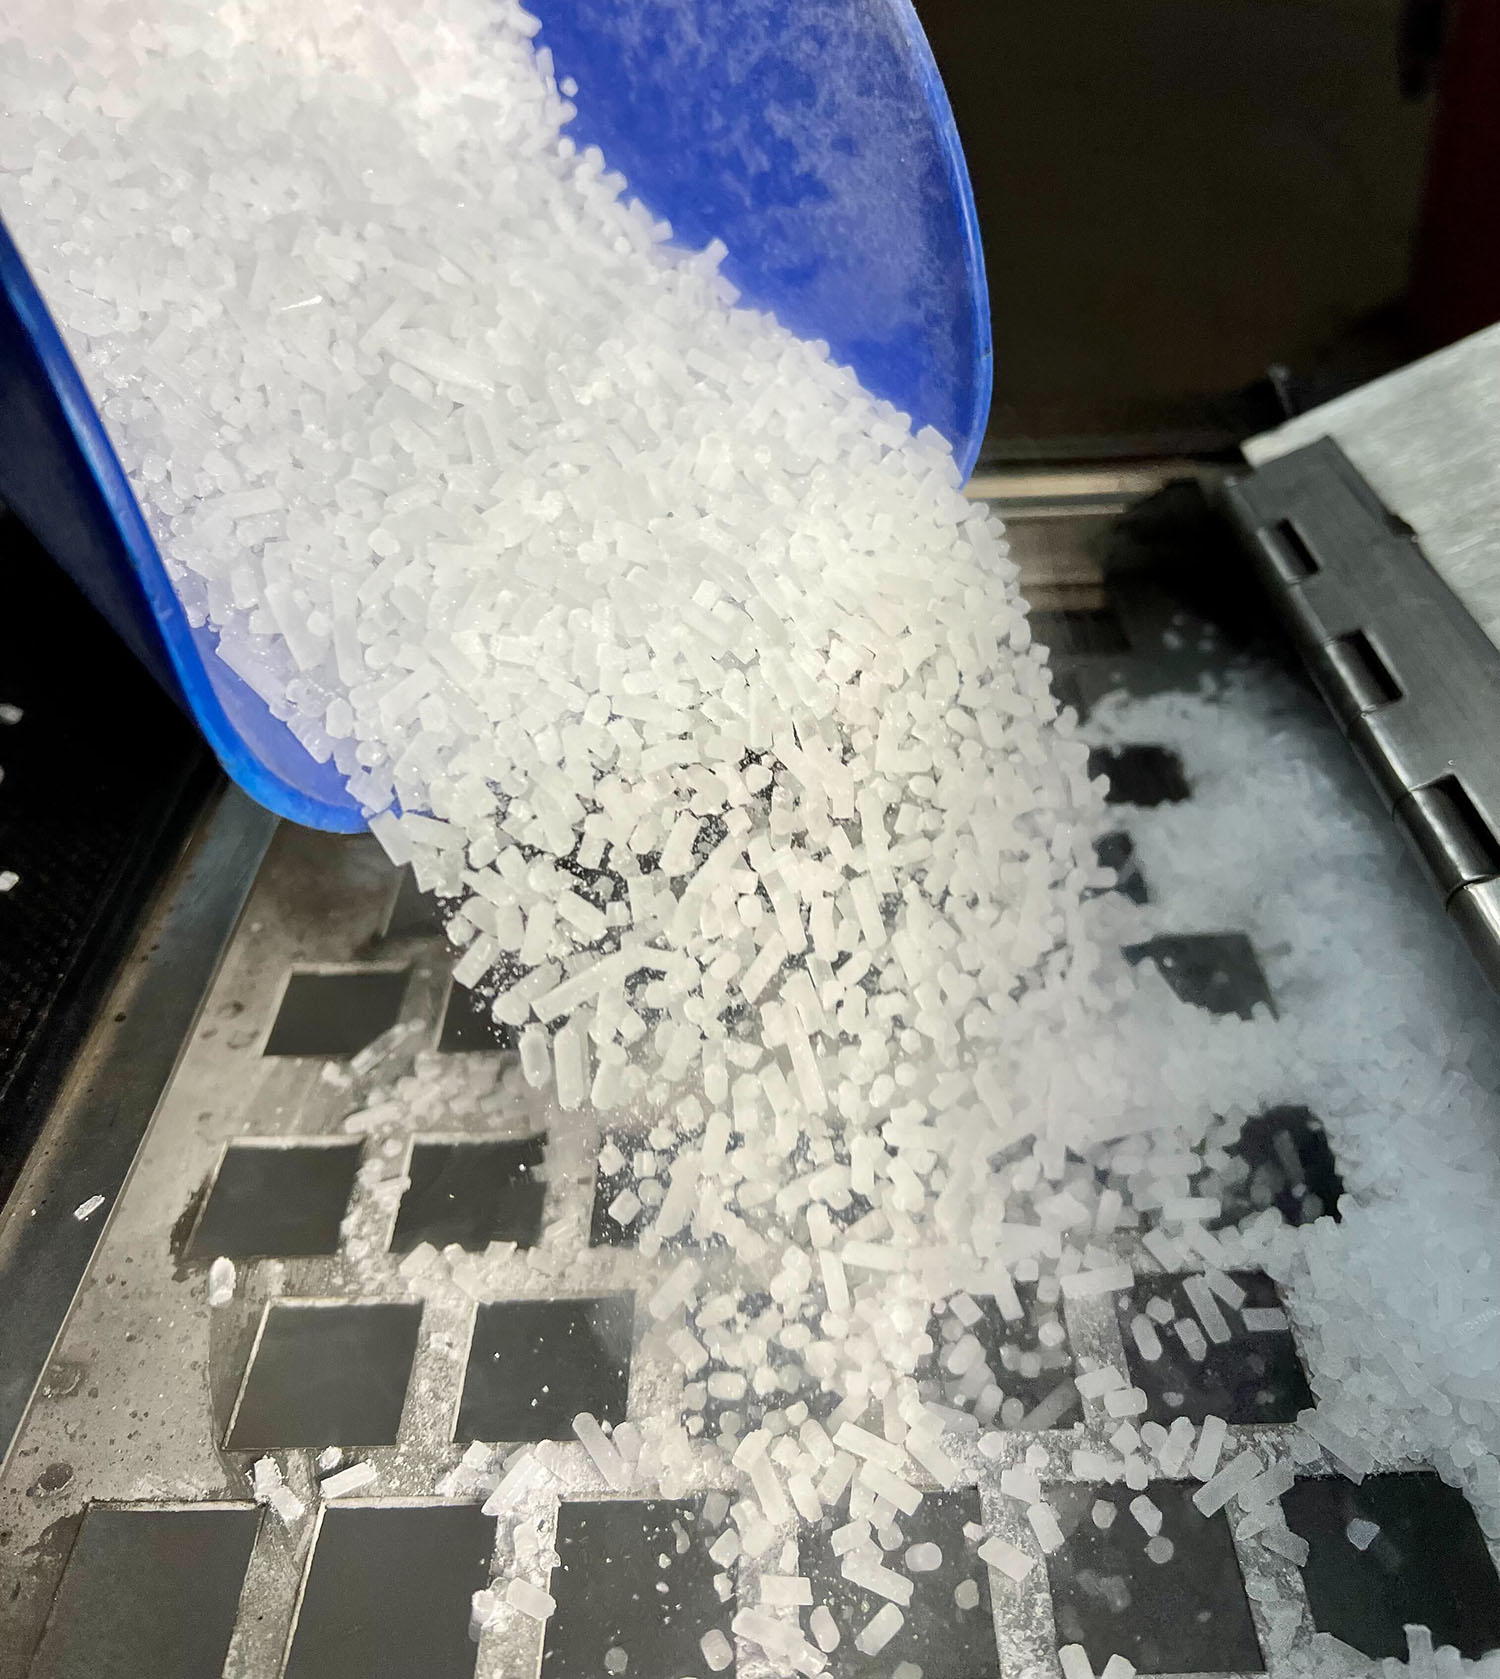 Dry ice pellets in scooper prior to dry ice blasting